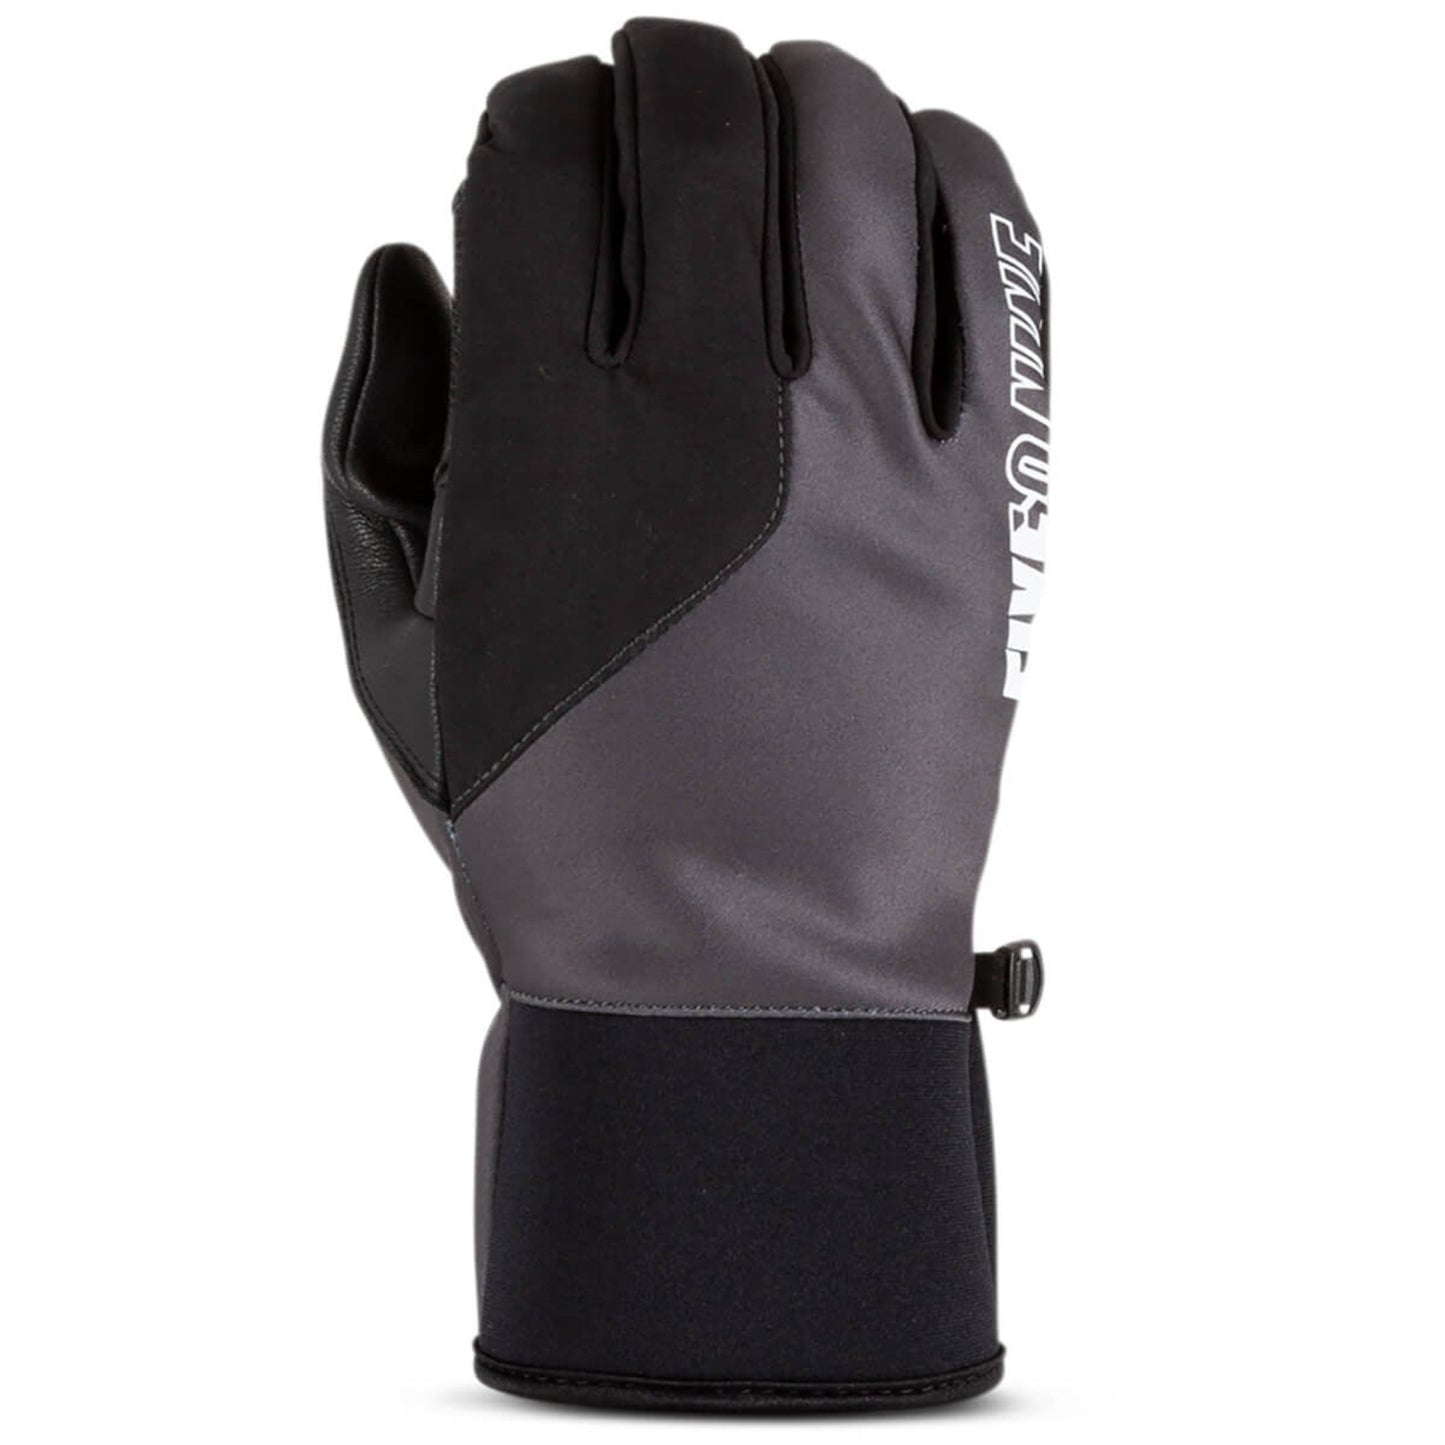 Factor Pro Gloves